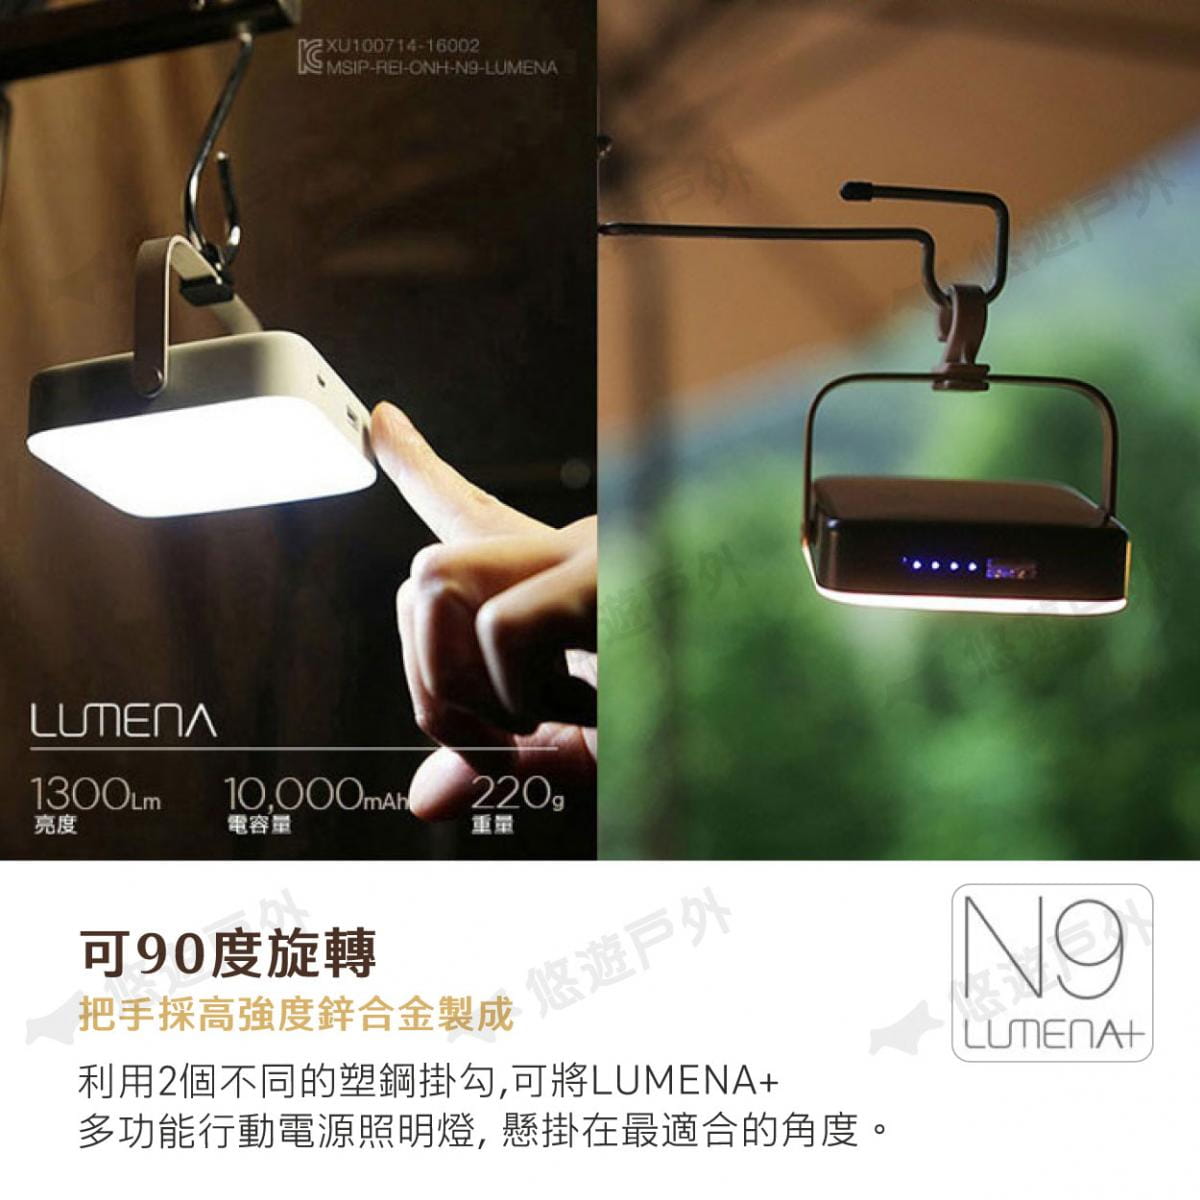 【N9 LUMENA+】行動電源照明LED燈 大N9 (悠遊˙戶外) 3